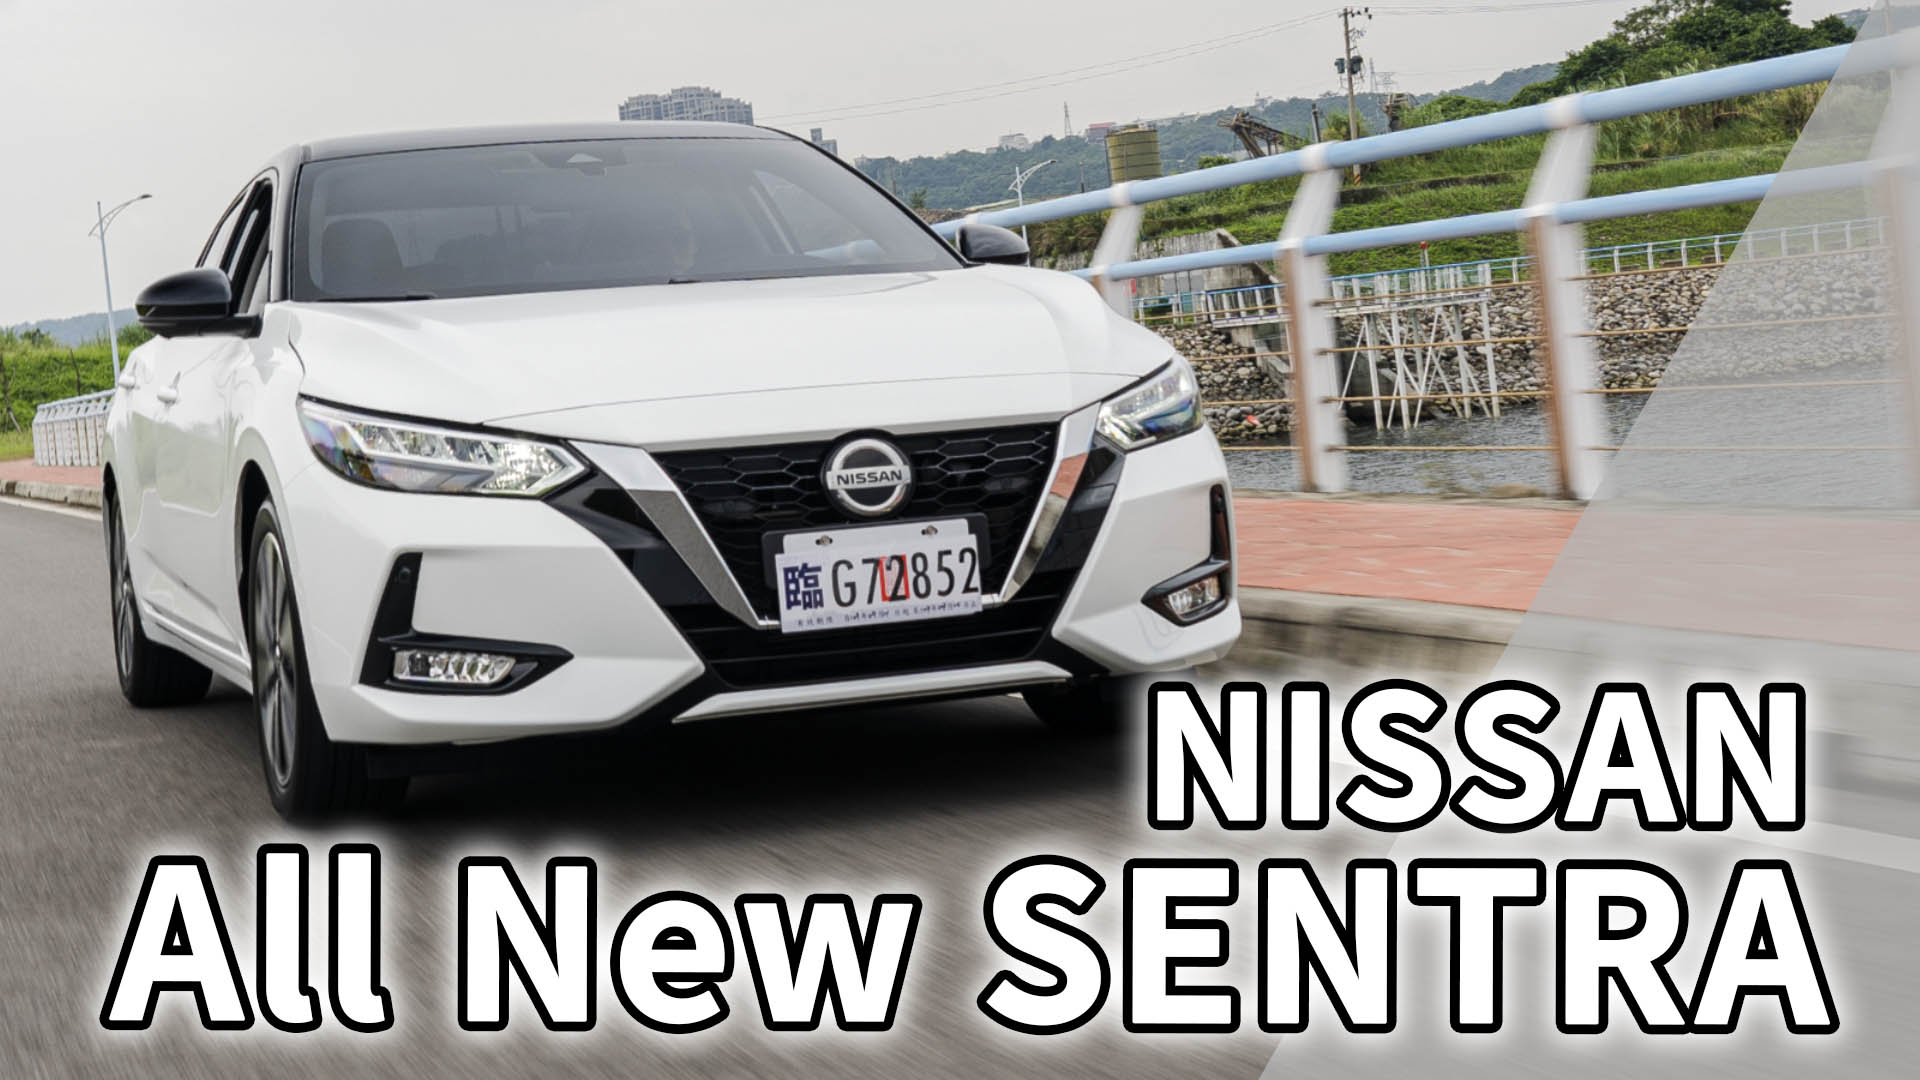 Andy老爹試駕 內裝有質感 外觀又帥氣 Nissan All New Sentra 強勢來襲